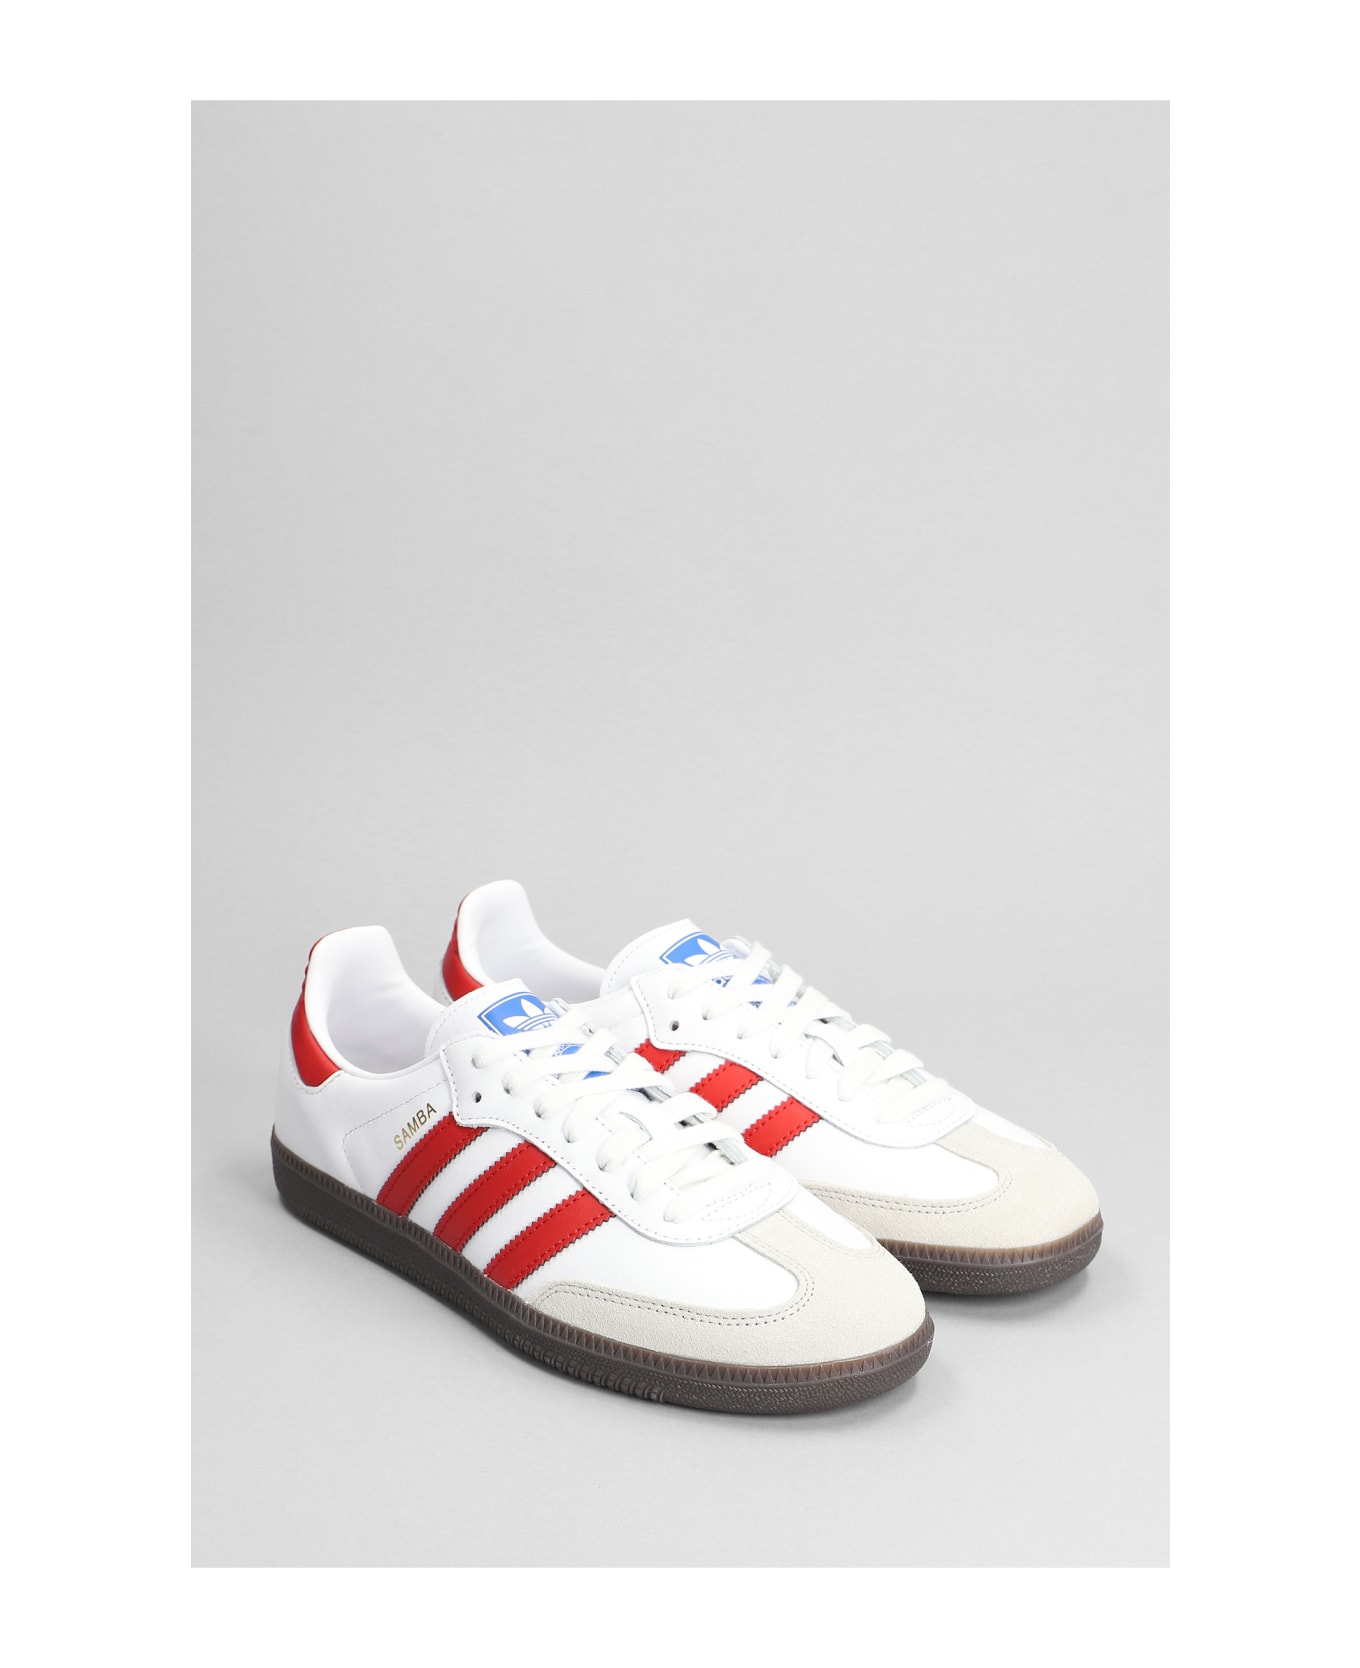 Adidas Originals 'samba' Leather Sneakers - WHITE/RED